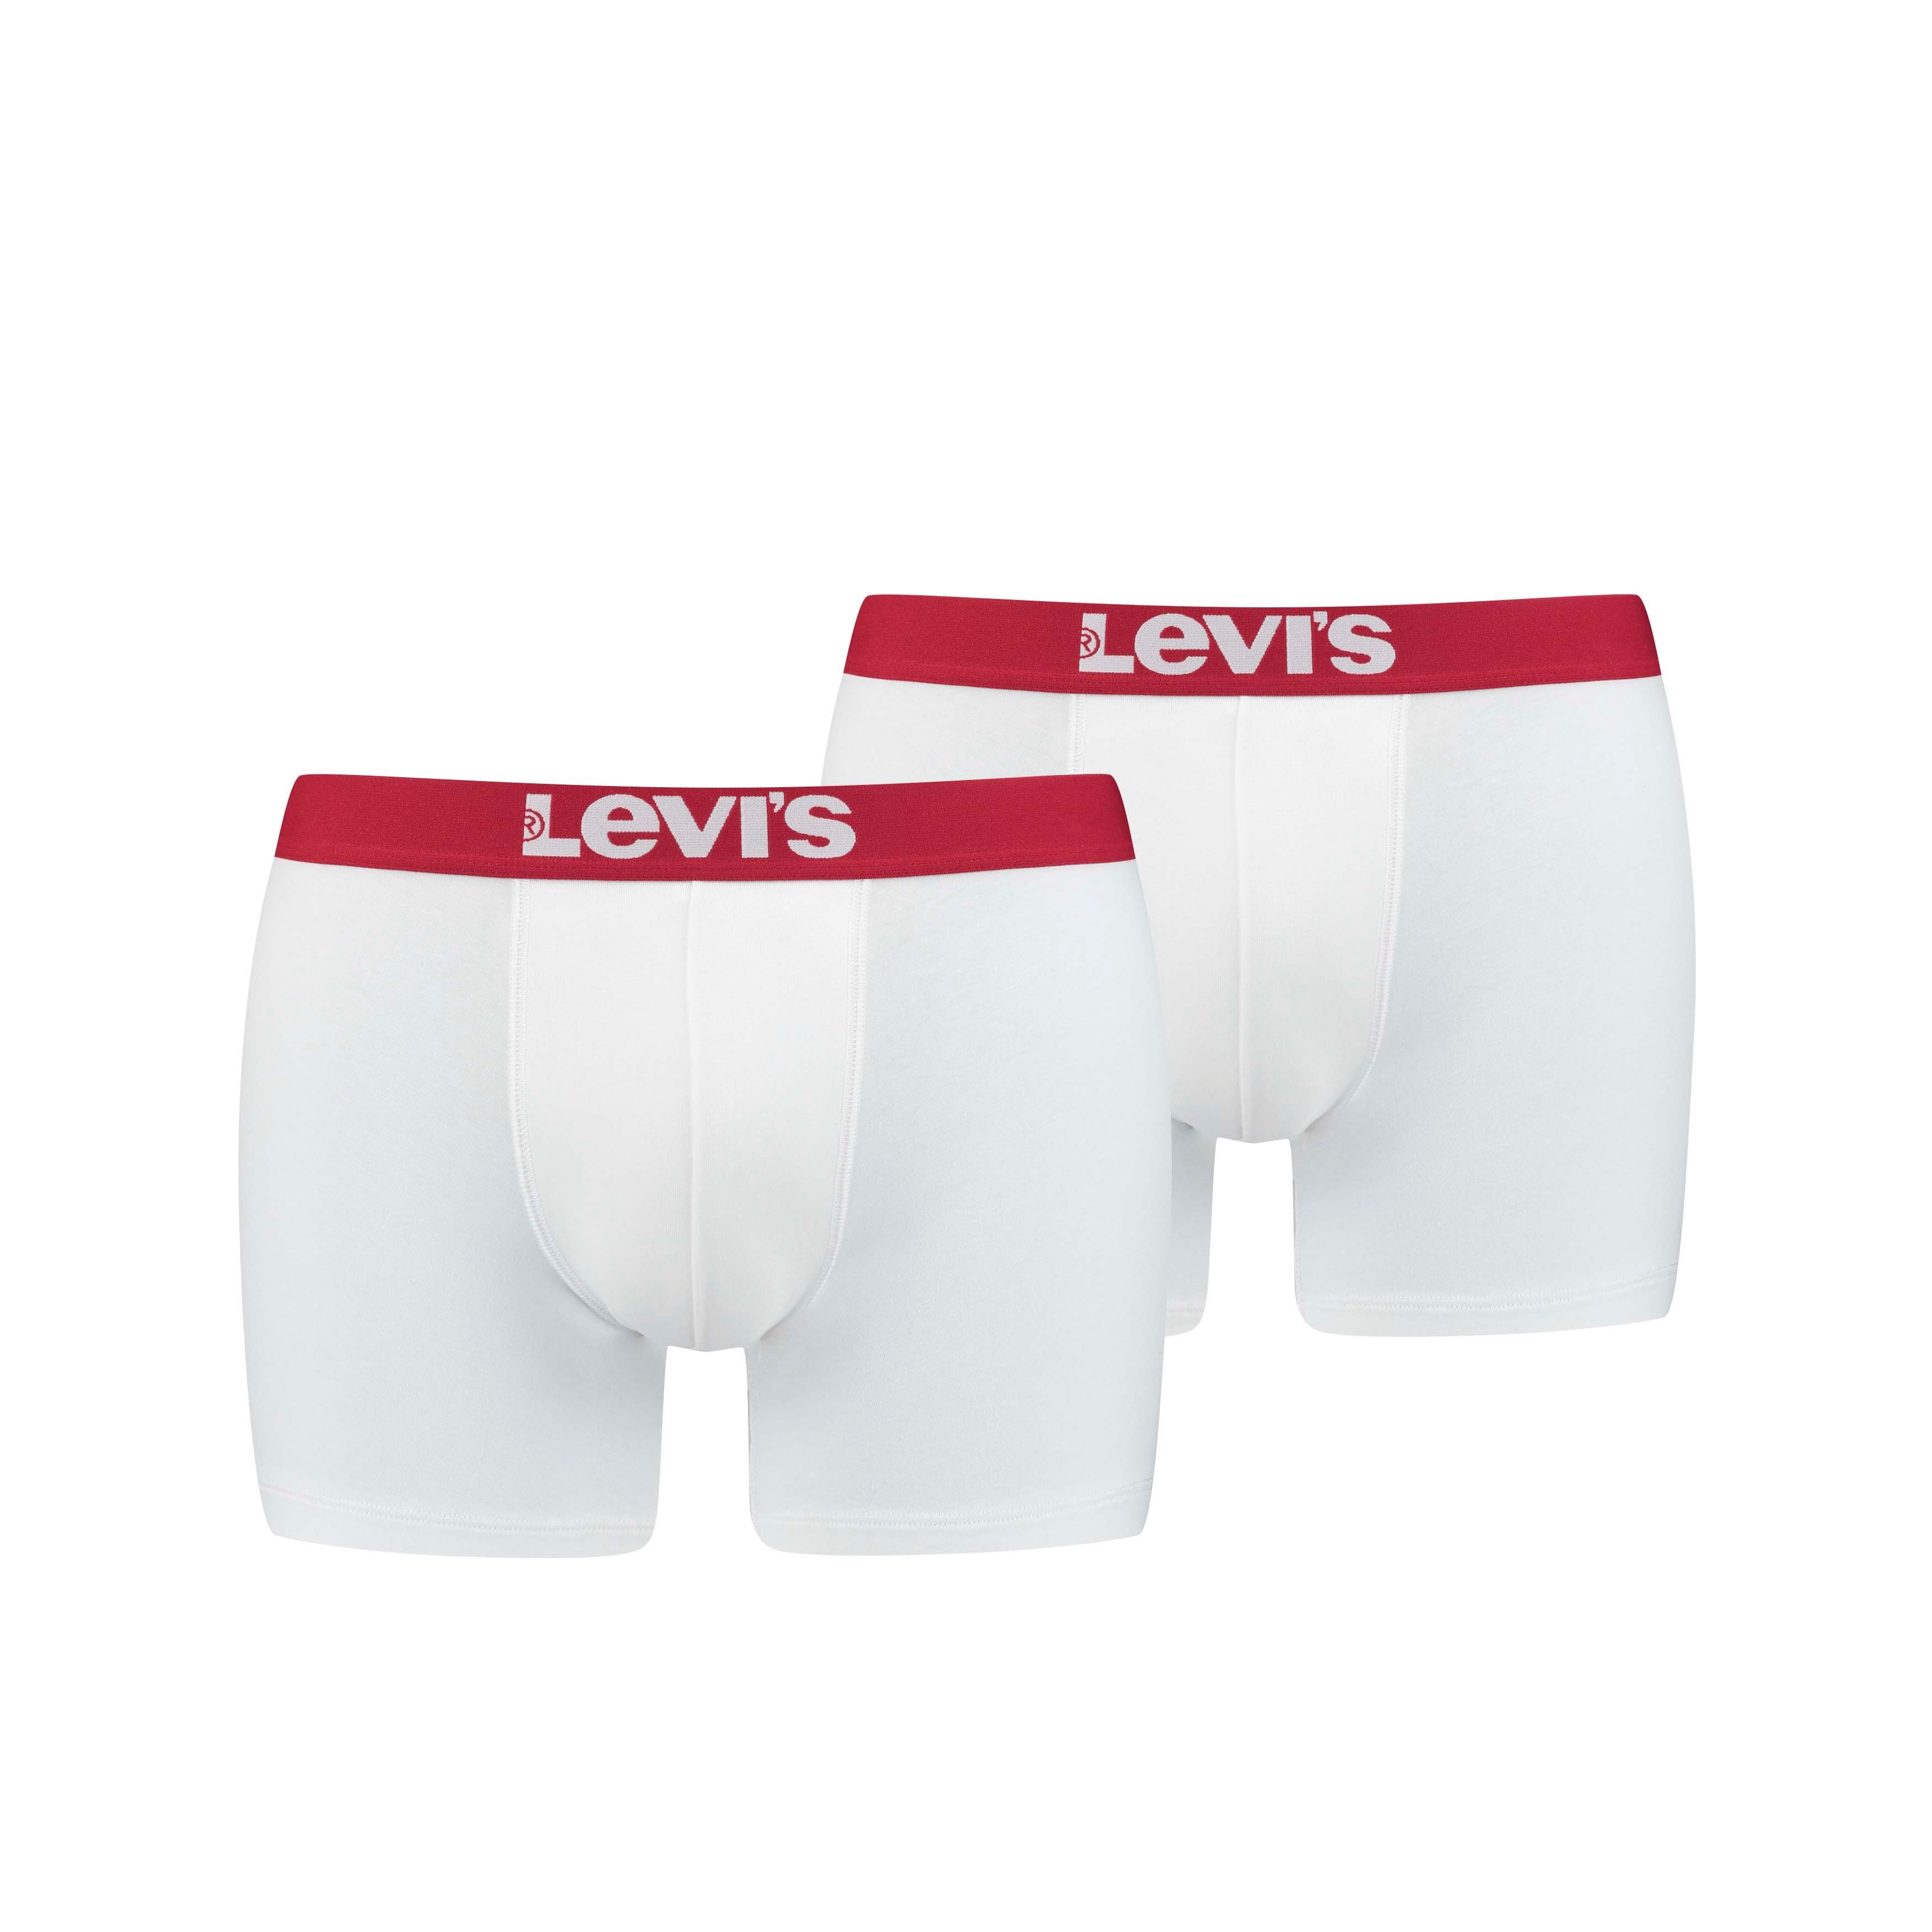 Doppelpack Weiß 2er (2erPack) Levi's® Levi's® ohne im Pack (2 Eingriff Boxershorts (2er Boxershorts Pack) Stück)